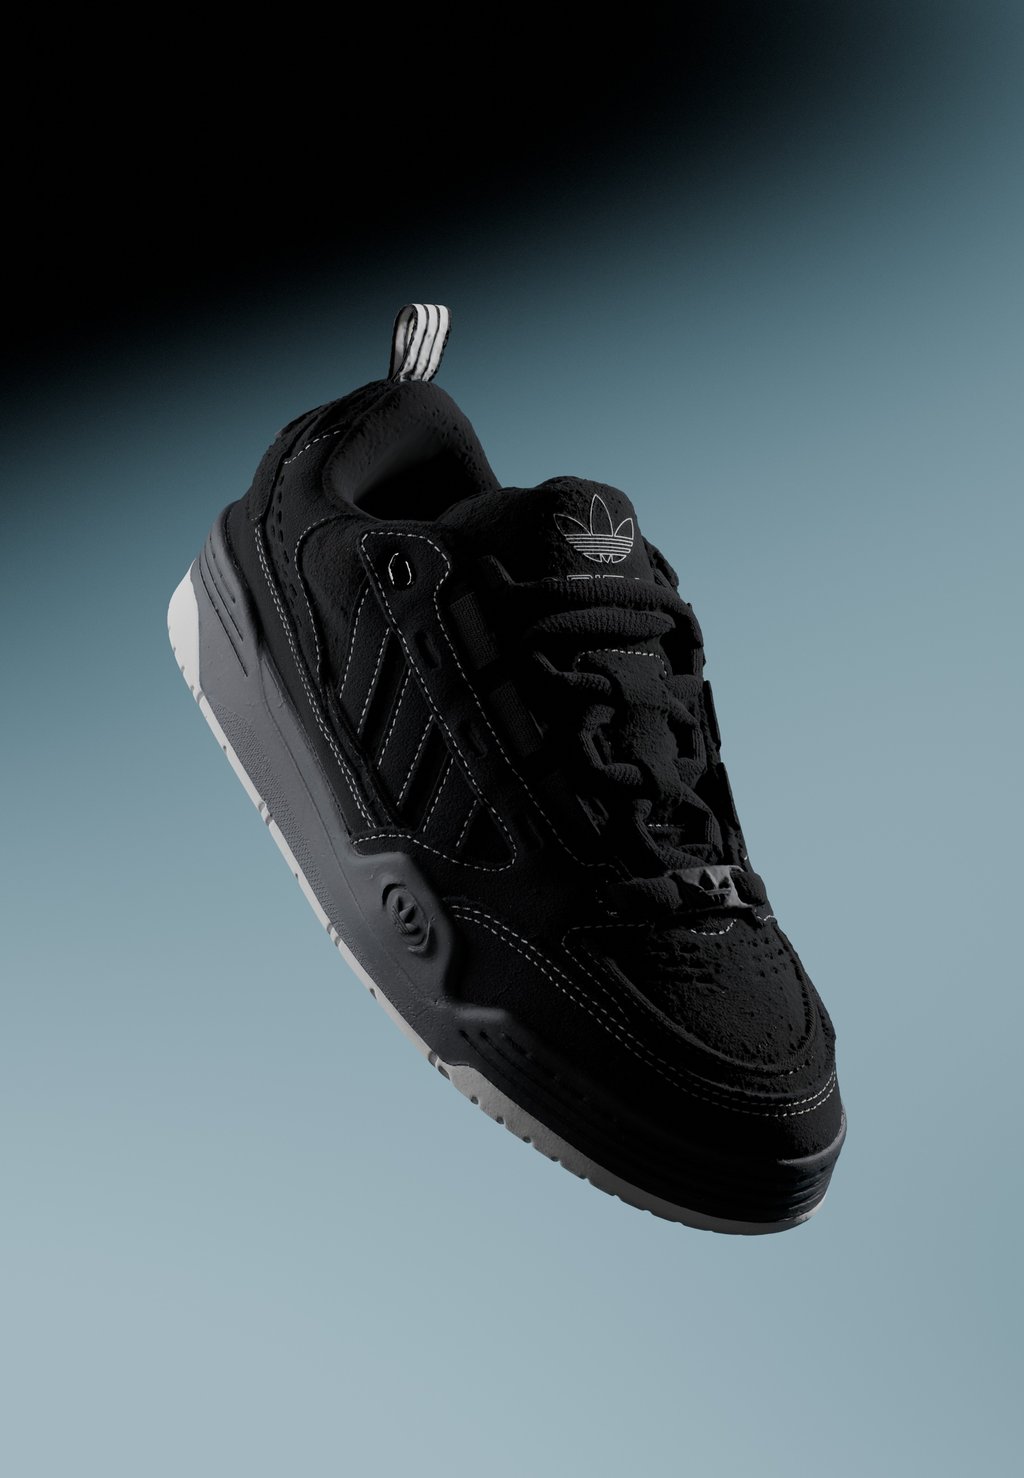 Обувь для скейтбординга Adi2000 Unisex adidas Originals, цвет core black/footwear white обувь для скейтбординга adi2000 unisex adidas originals цвет oat core black wonder white